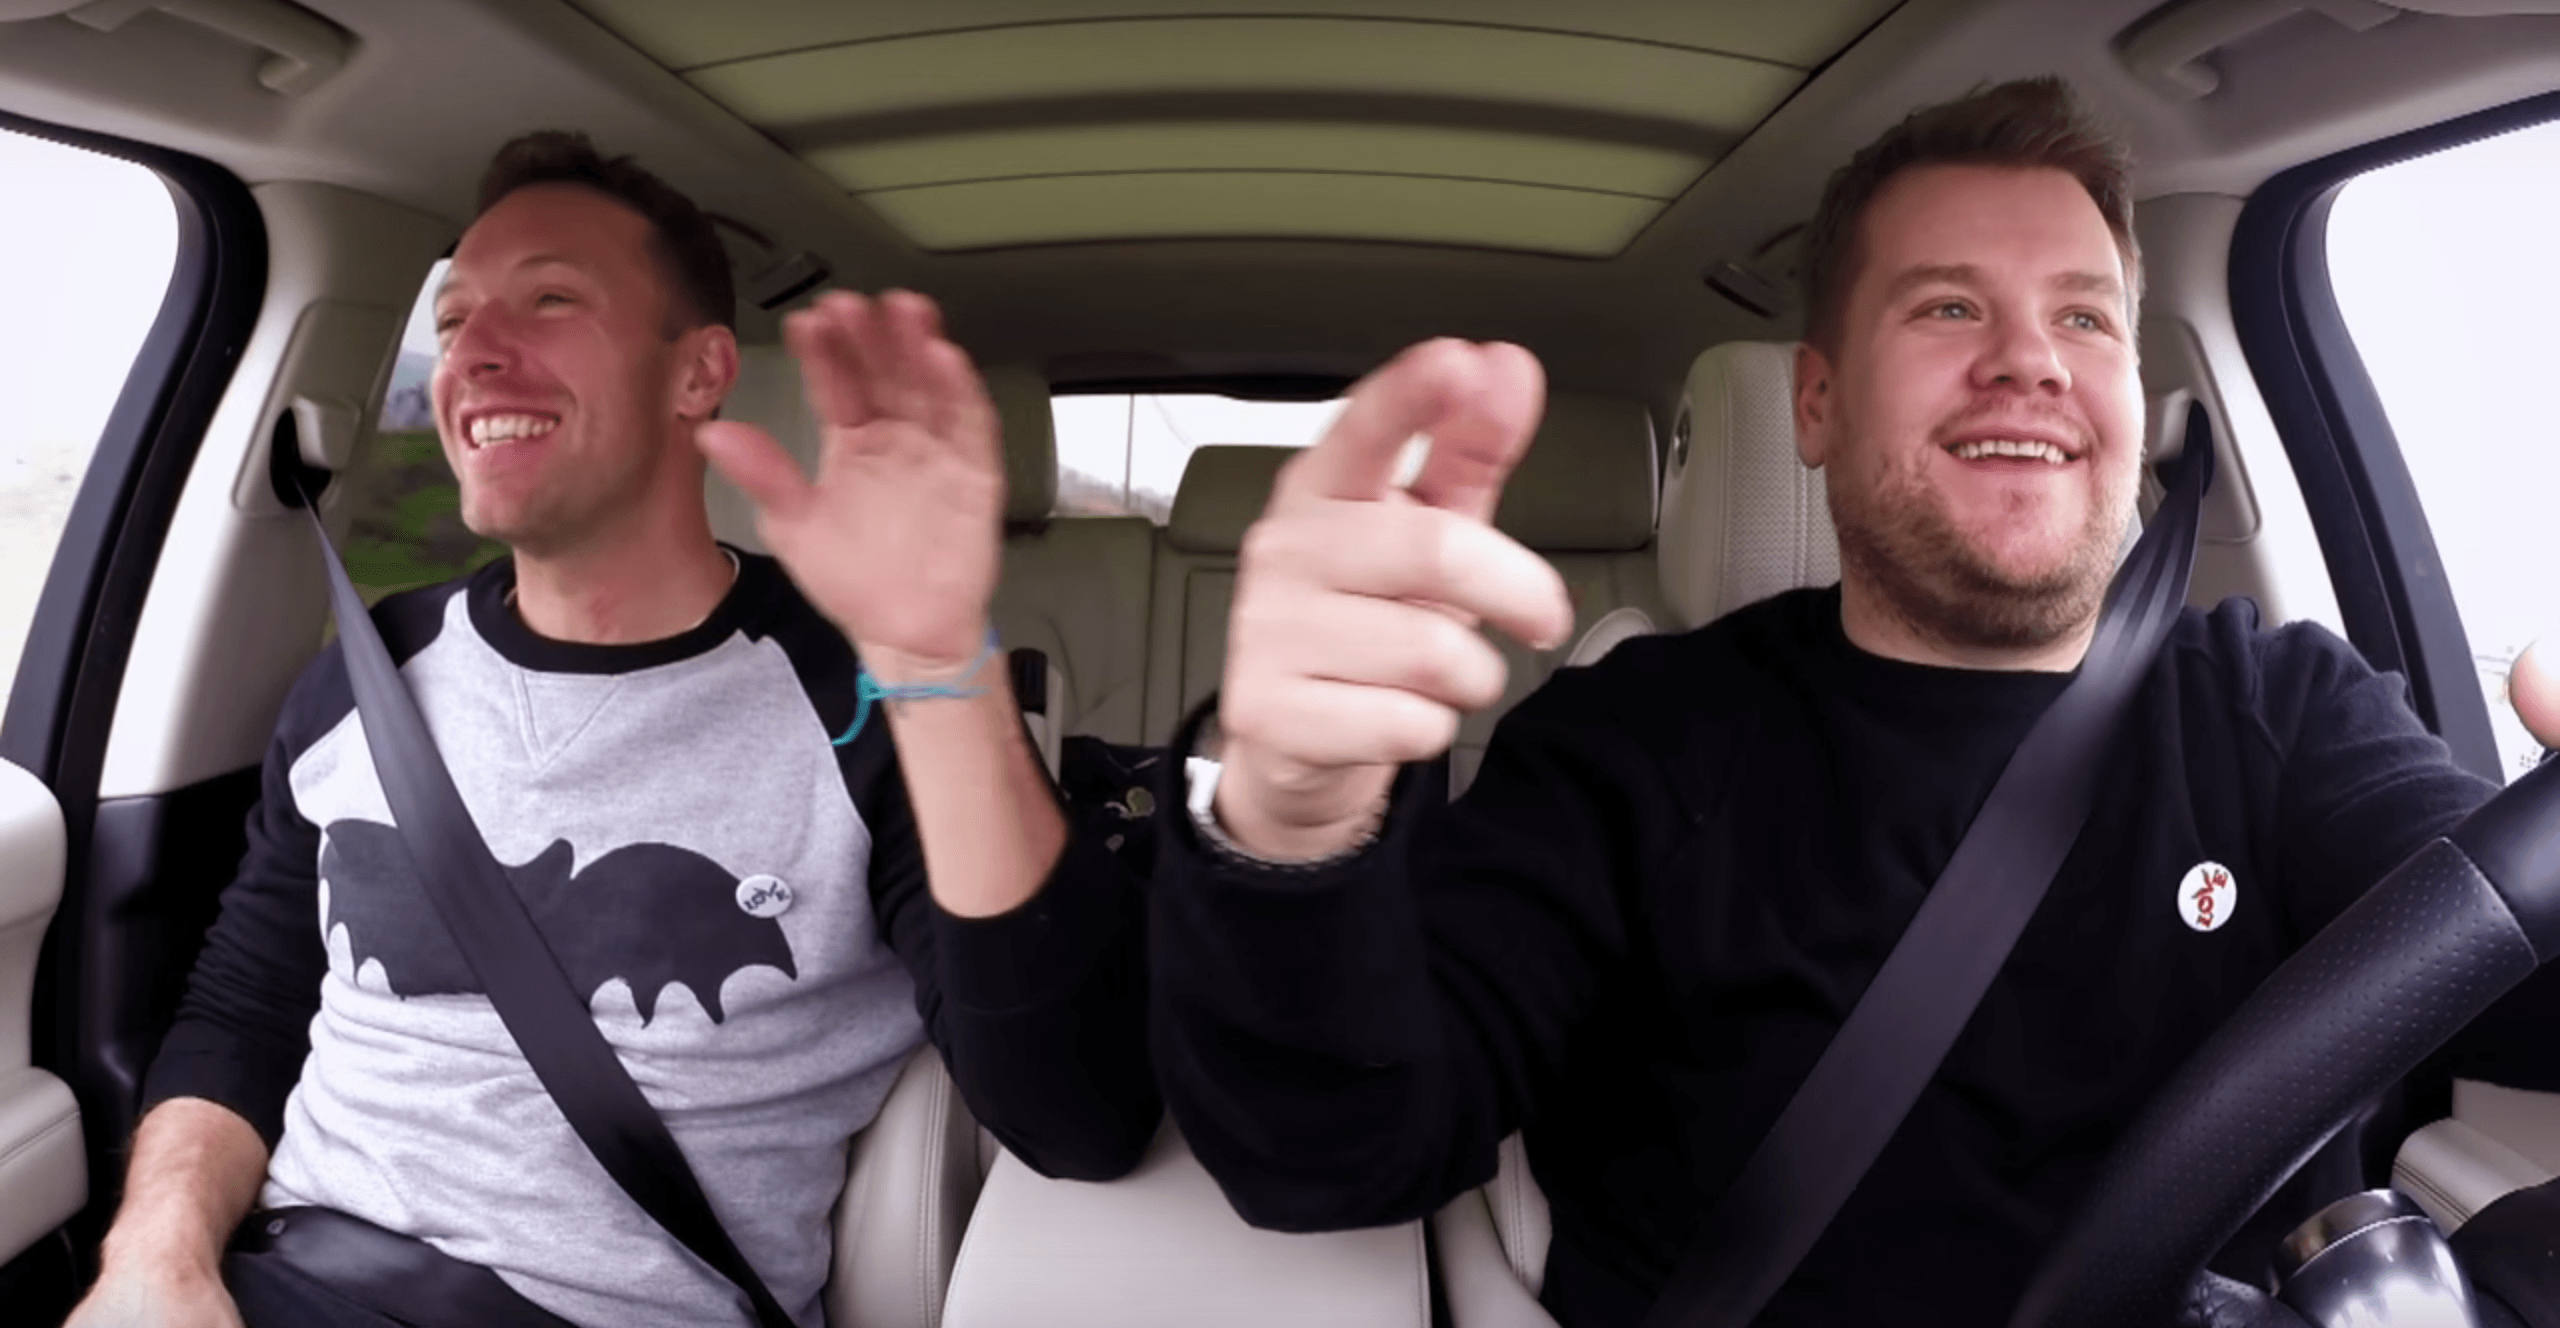 WATCH: Carpool Karaoke with Chris Martin and James Corden